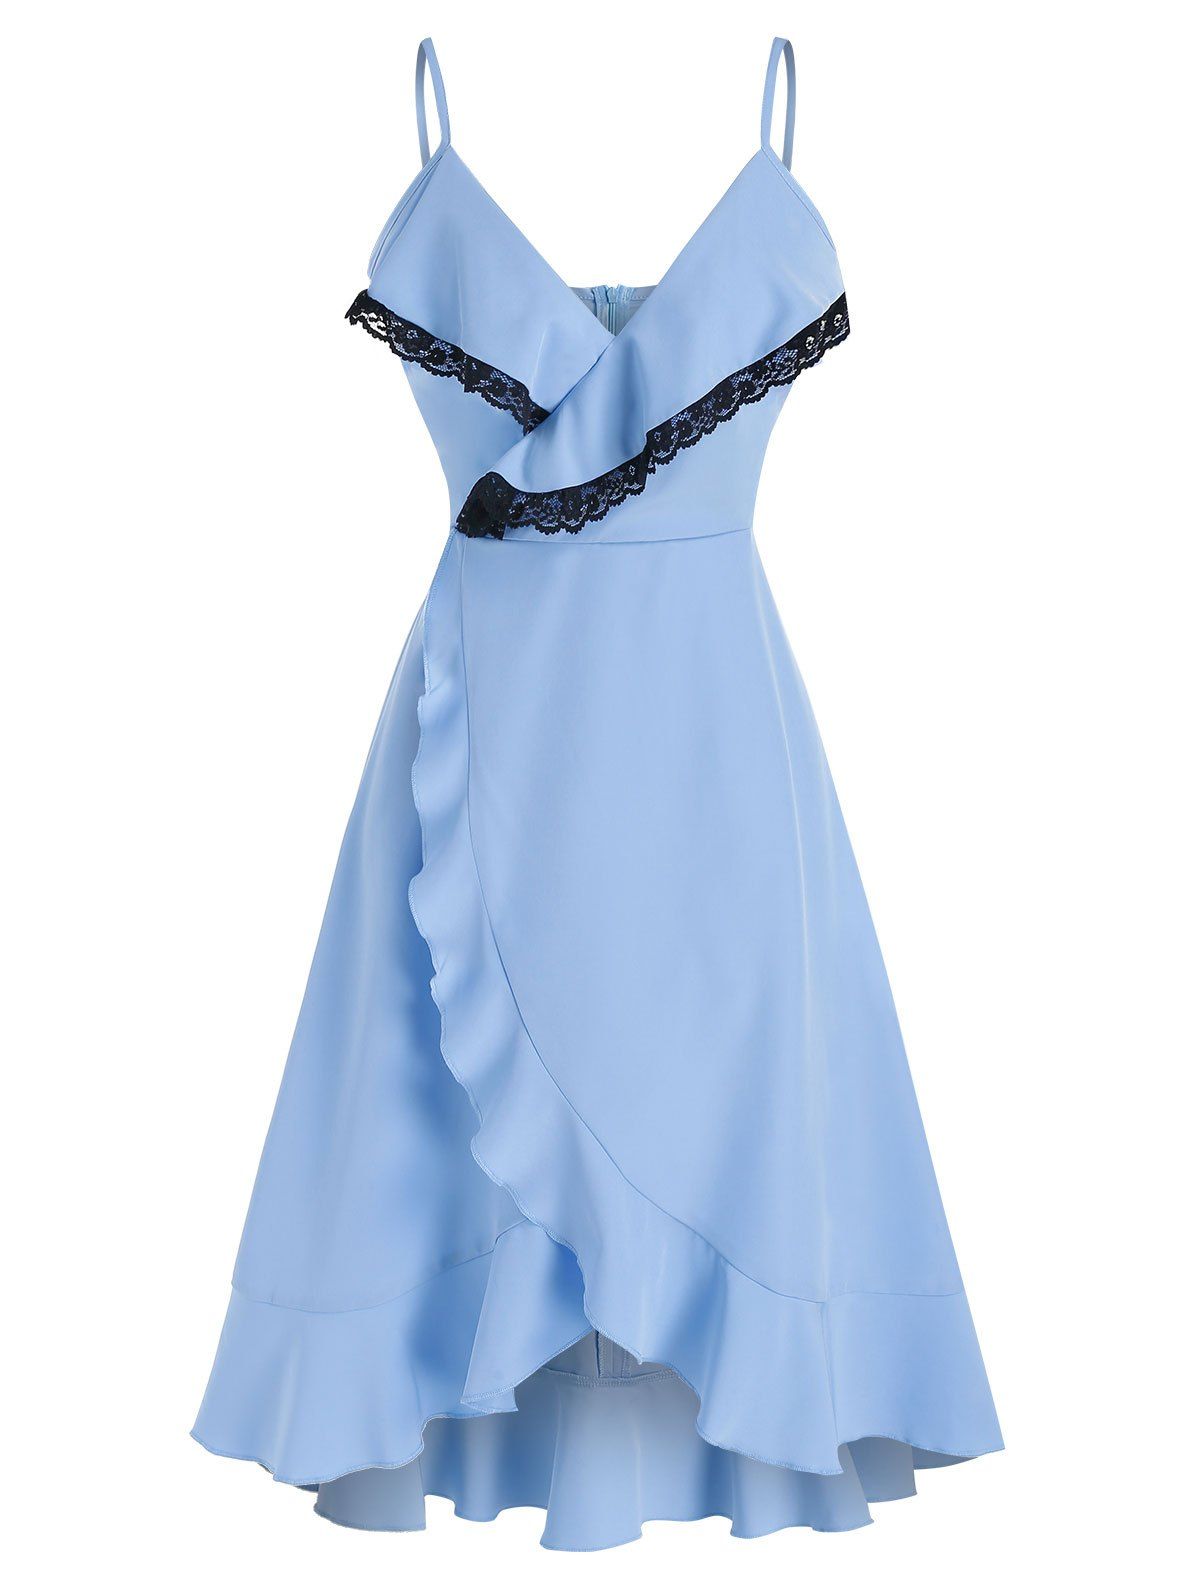 High Low A Line Dress Ruffle Low Cut Surplice Lace Insert Overlap Strappy Dress - LIGHT BLUE L